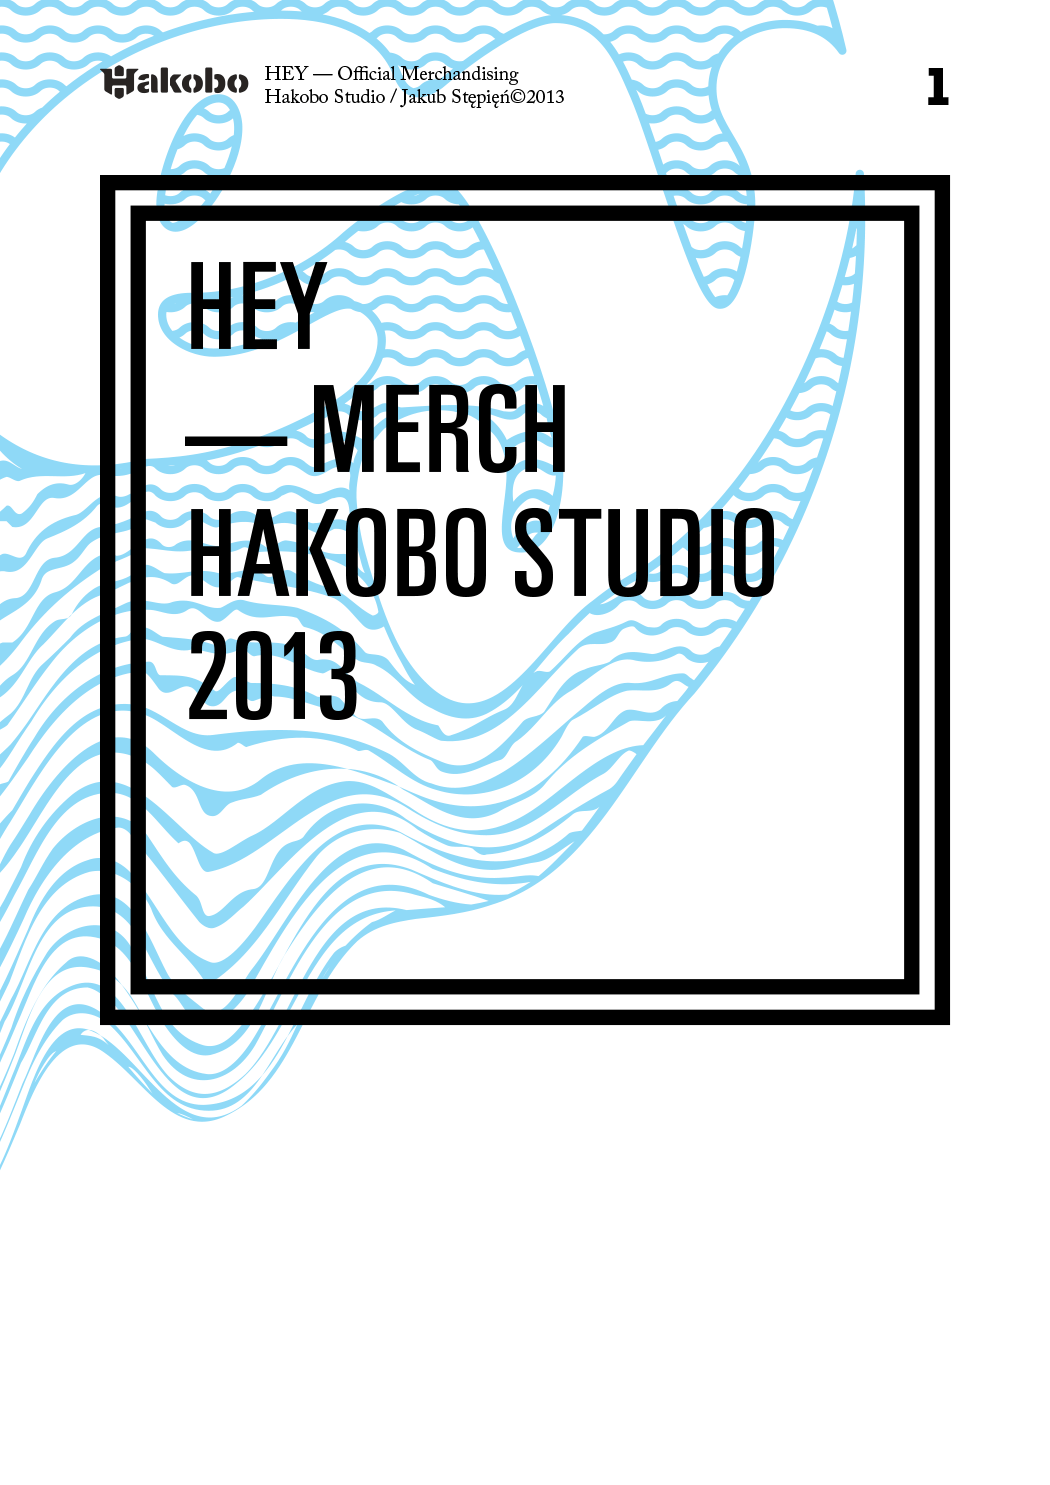 hey-band-merch-hakobo-jakub-stepien-prints-t-shirt-1